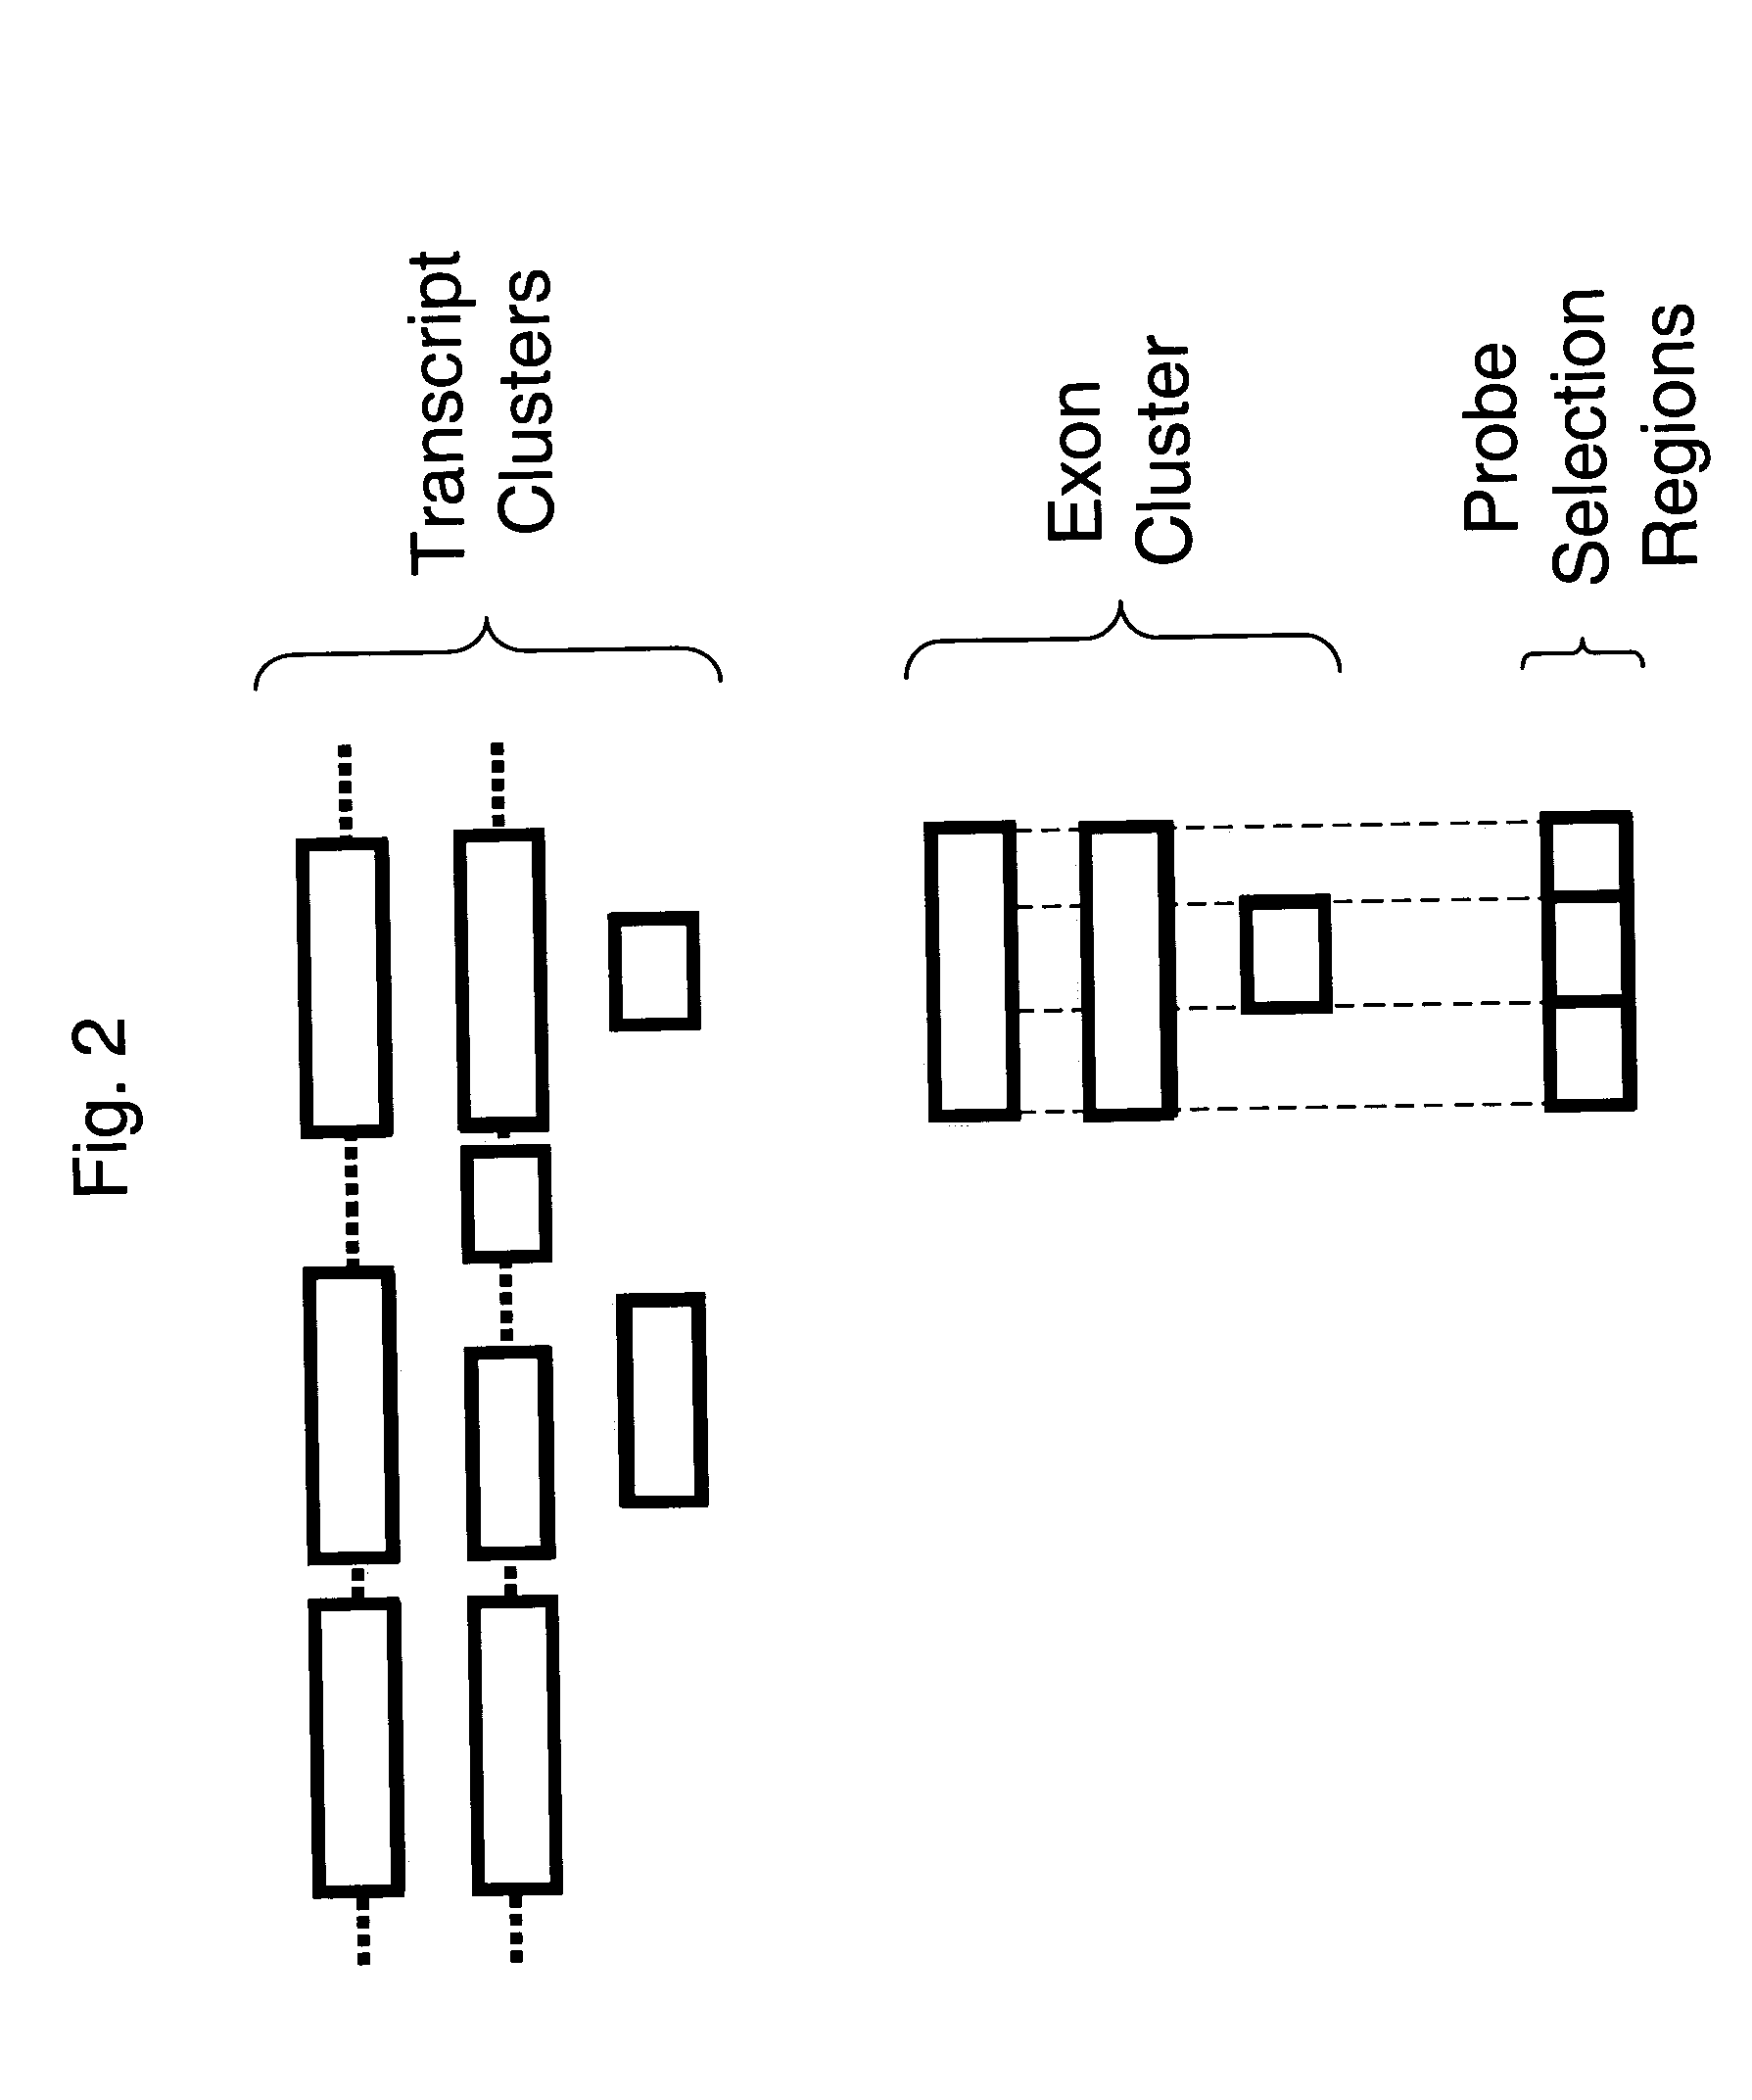 Methods of analysis of alternative splicing in human